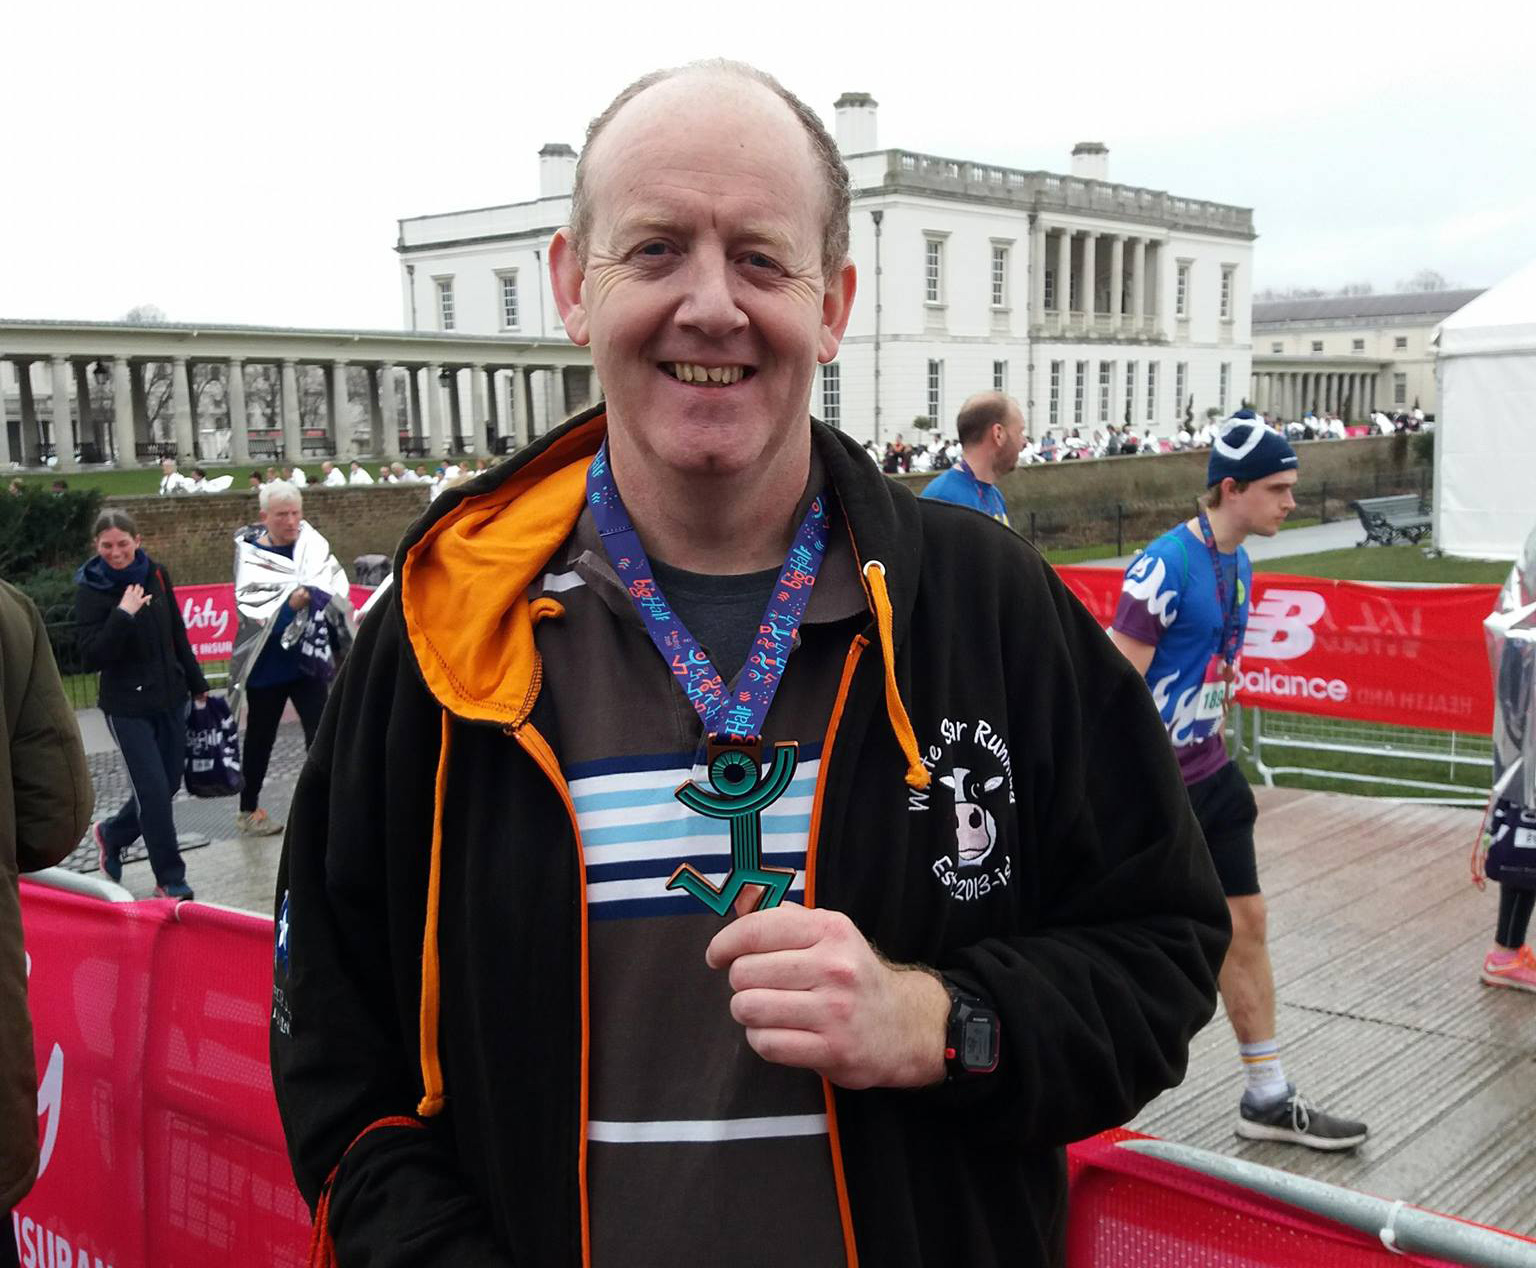 Gary Tyler at Big Half Marathon in London